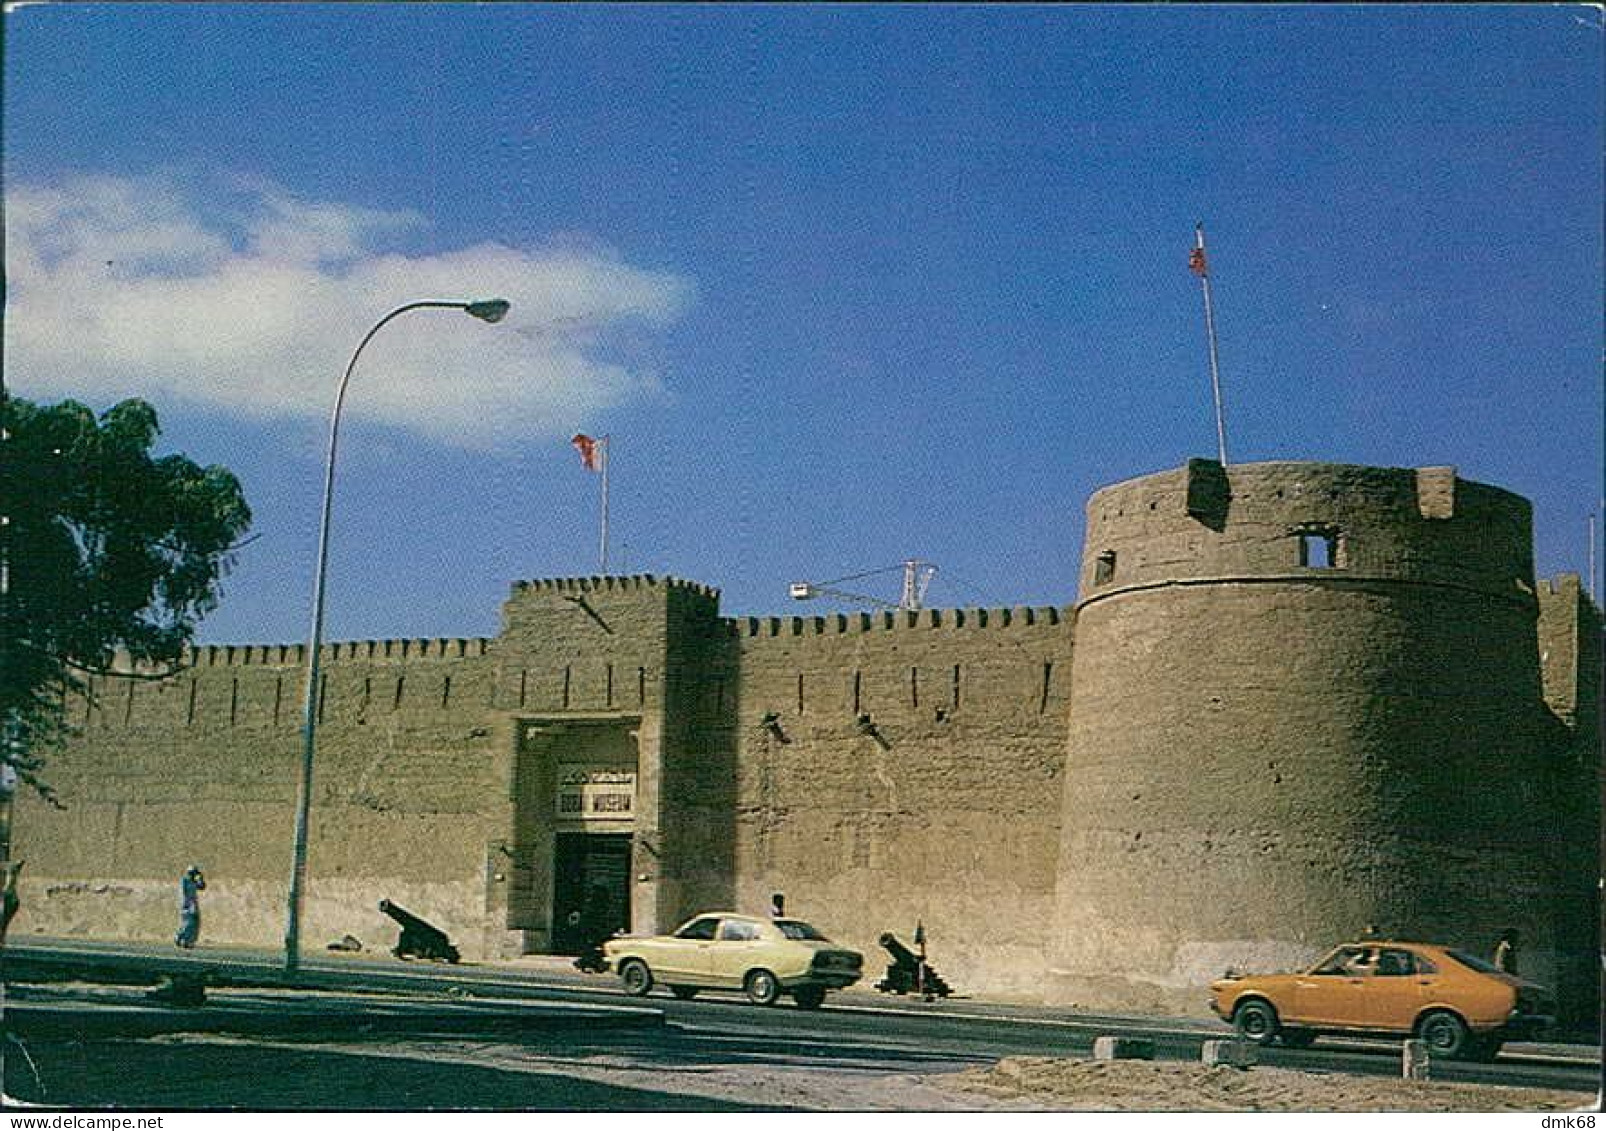 UNITED ARAB EMIRATES - DUBAI MUSEUM - PHOTO & COP. FAROOK INTERN. STATIONERY - 1970s/80s (17310) - Emirats Arabes Unis